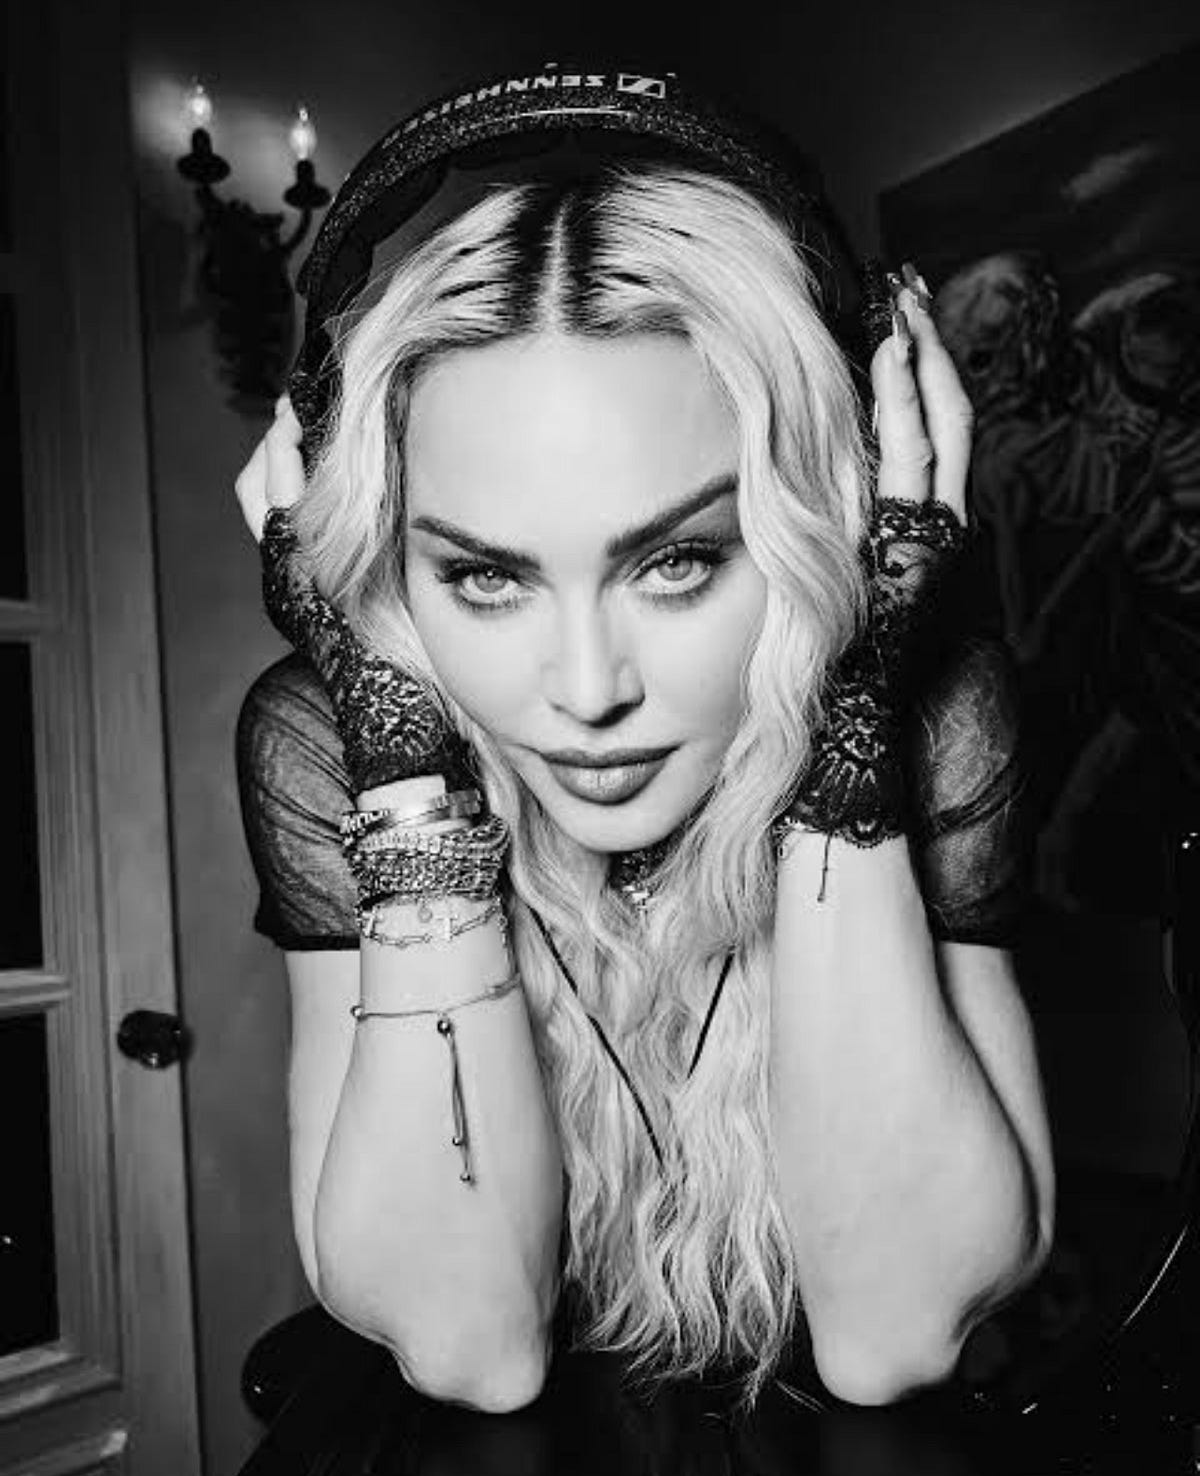 Madonna's Louis Vuitton Photoshoot